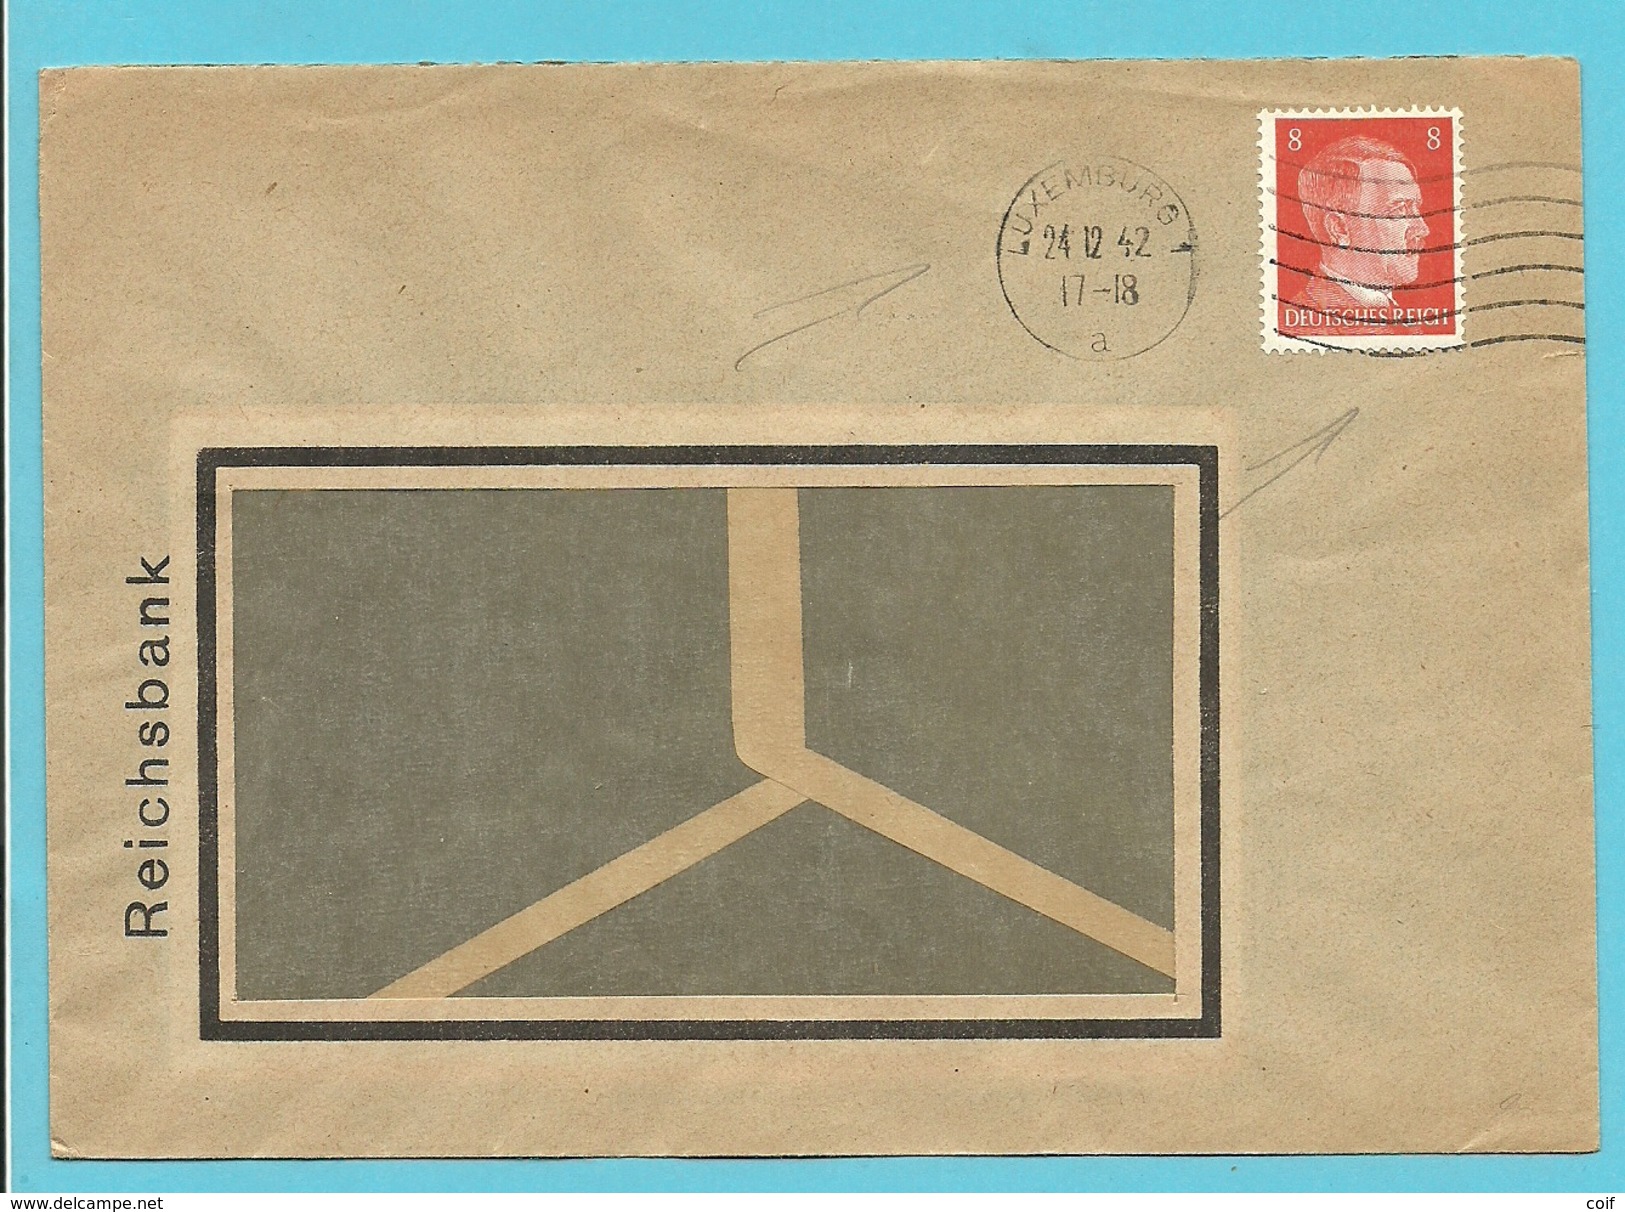 Duitse Postzegel Op Brief Met Stempel LUXEMBURG Op 24/12/42 - 1940-1944 German Occupation